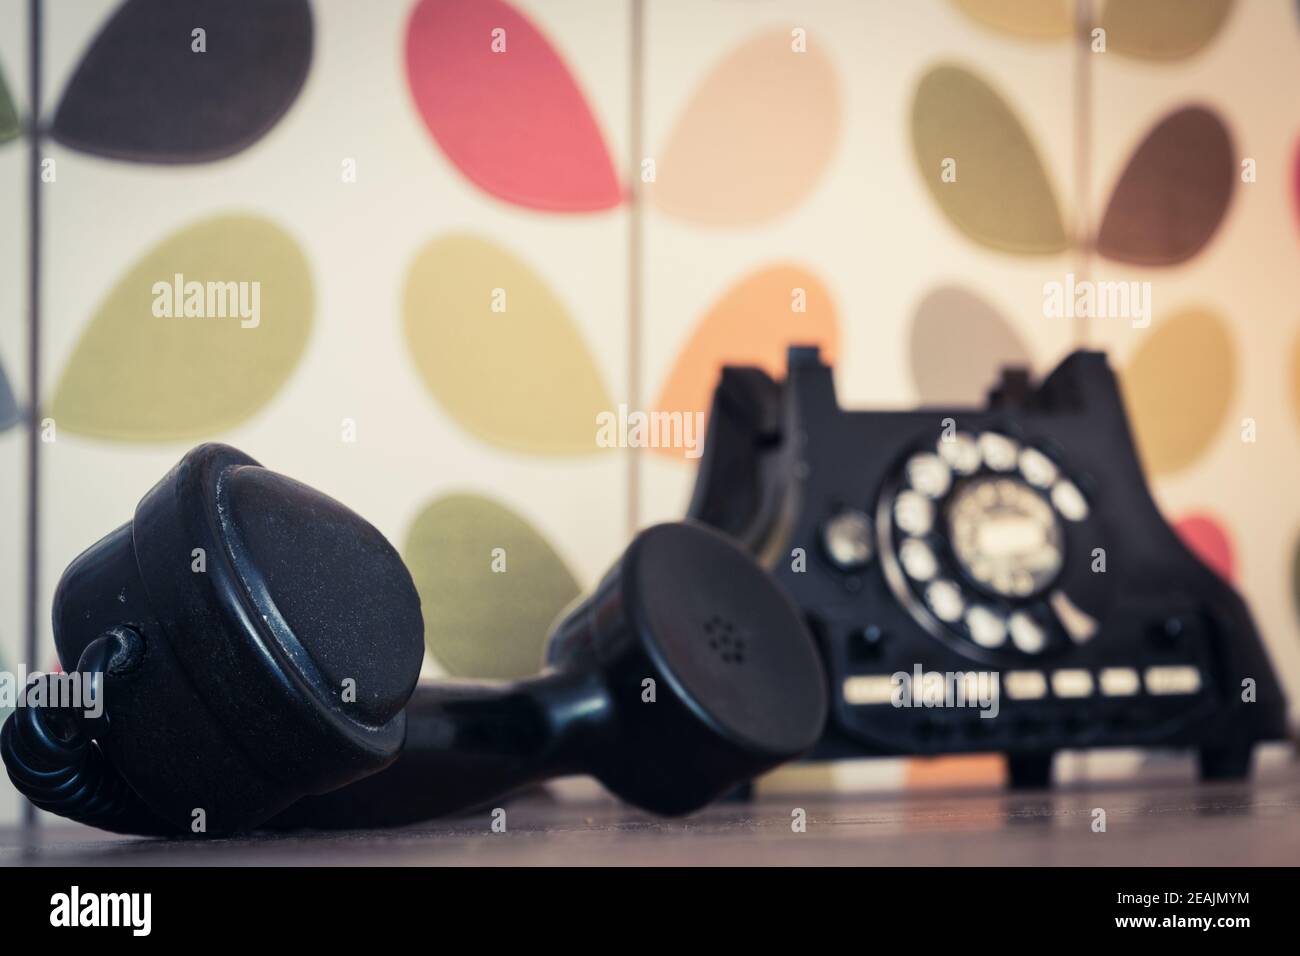 Alte retro und vintage Drehtelefon aus dem Haken, bunte Tapete, selektive Fokus Stockfoto